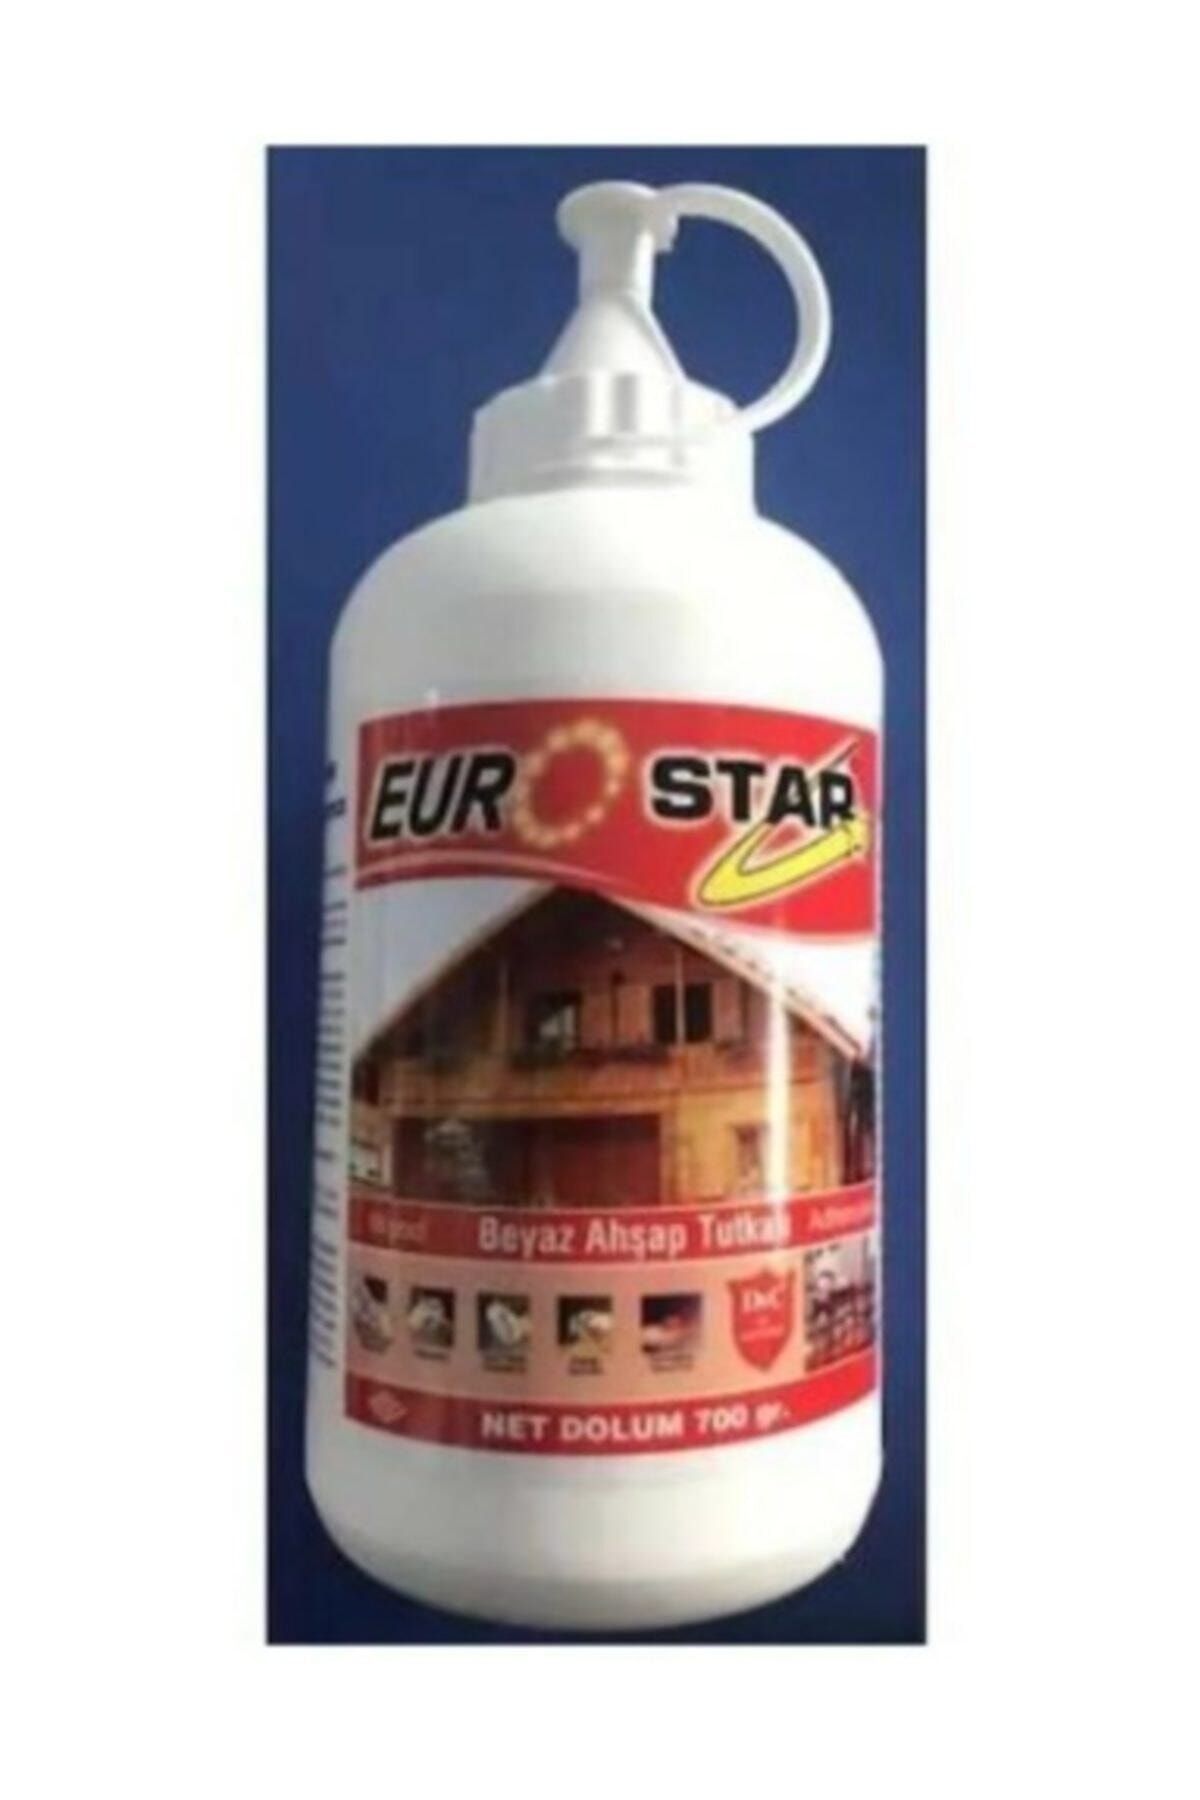 EuroStar Bieney Beyaz Ahşap Tutkal 350 gr 2263512